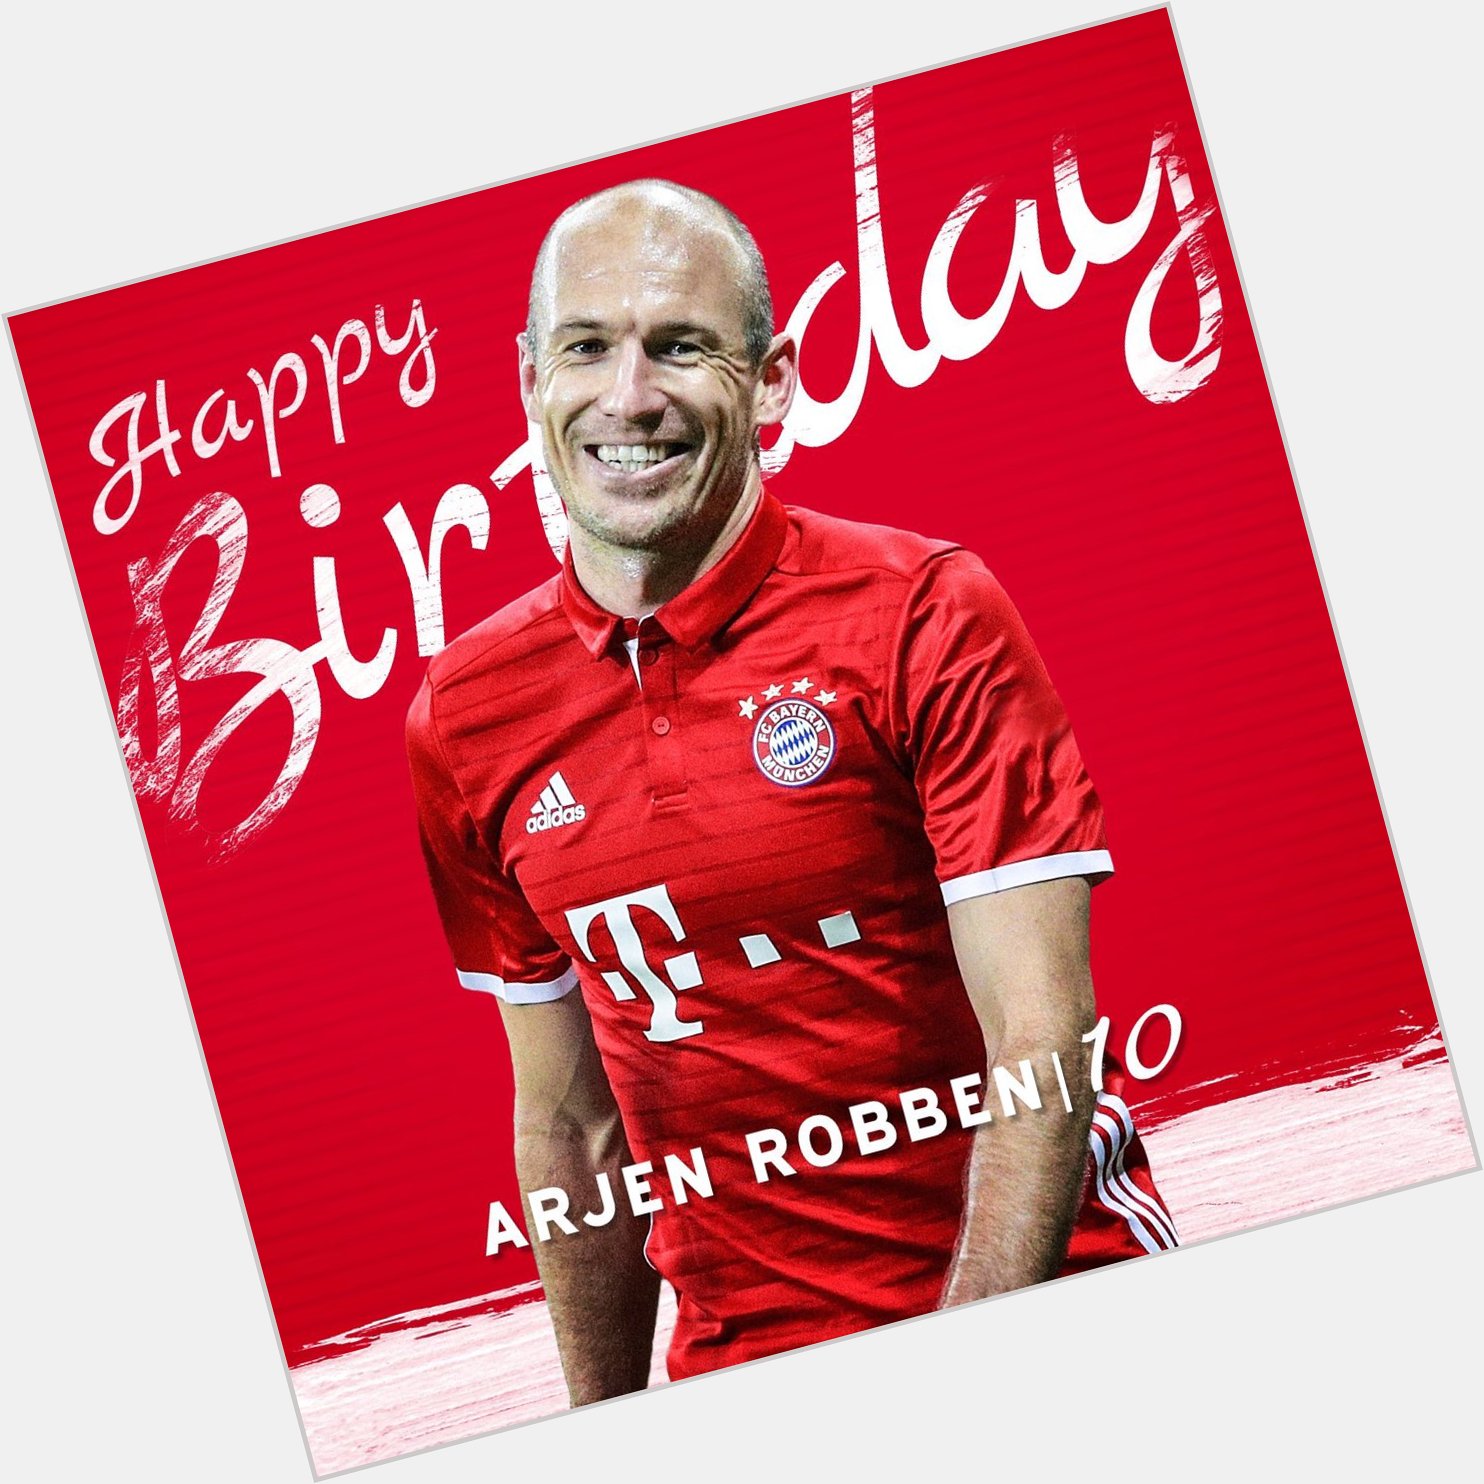 HAPPY BIRTHDAY TO MY FAV FOOTBALLER ARJEN ROBBEN, HIS 33 TODAY 